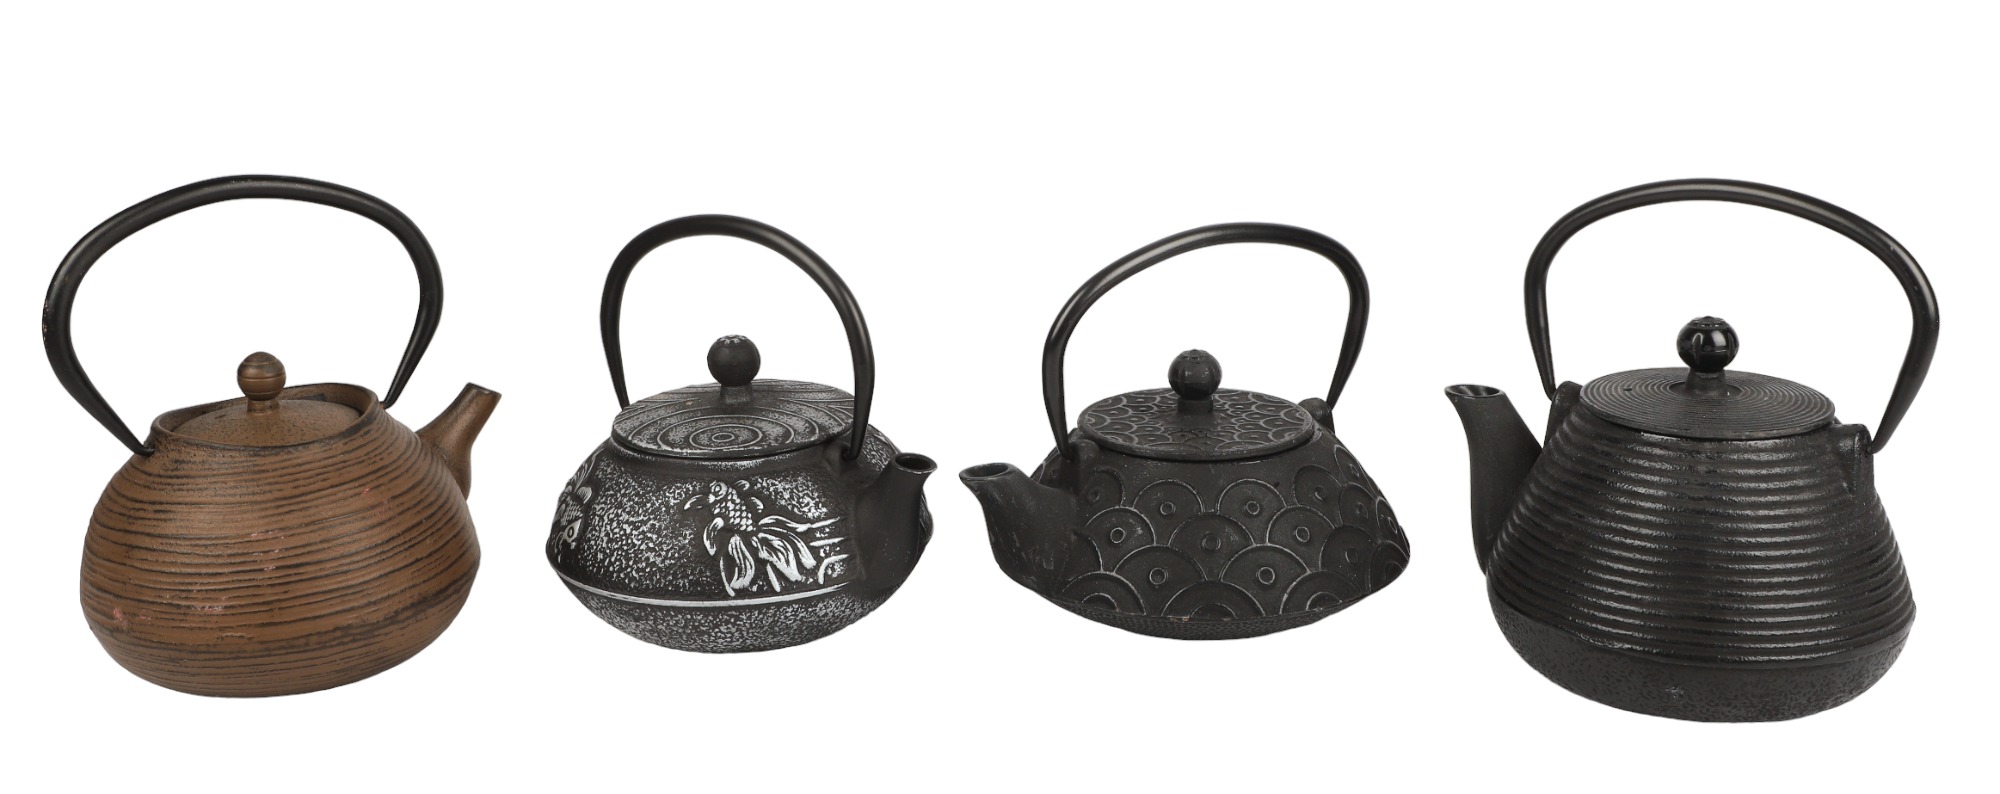  4 Asian cast iron teapots 2  3ca764